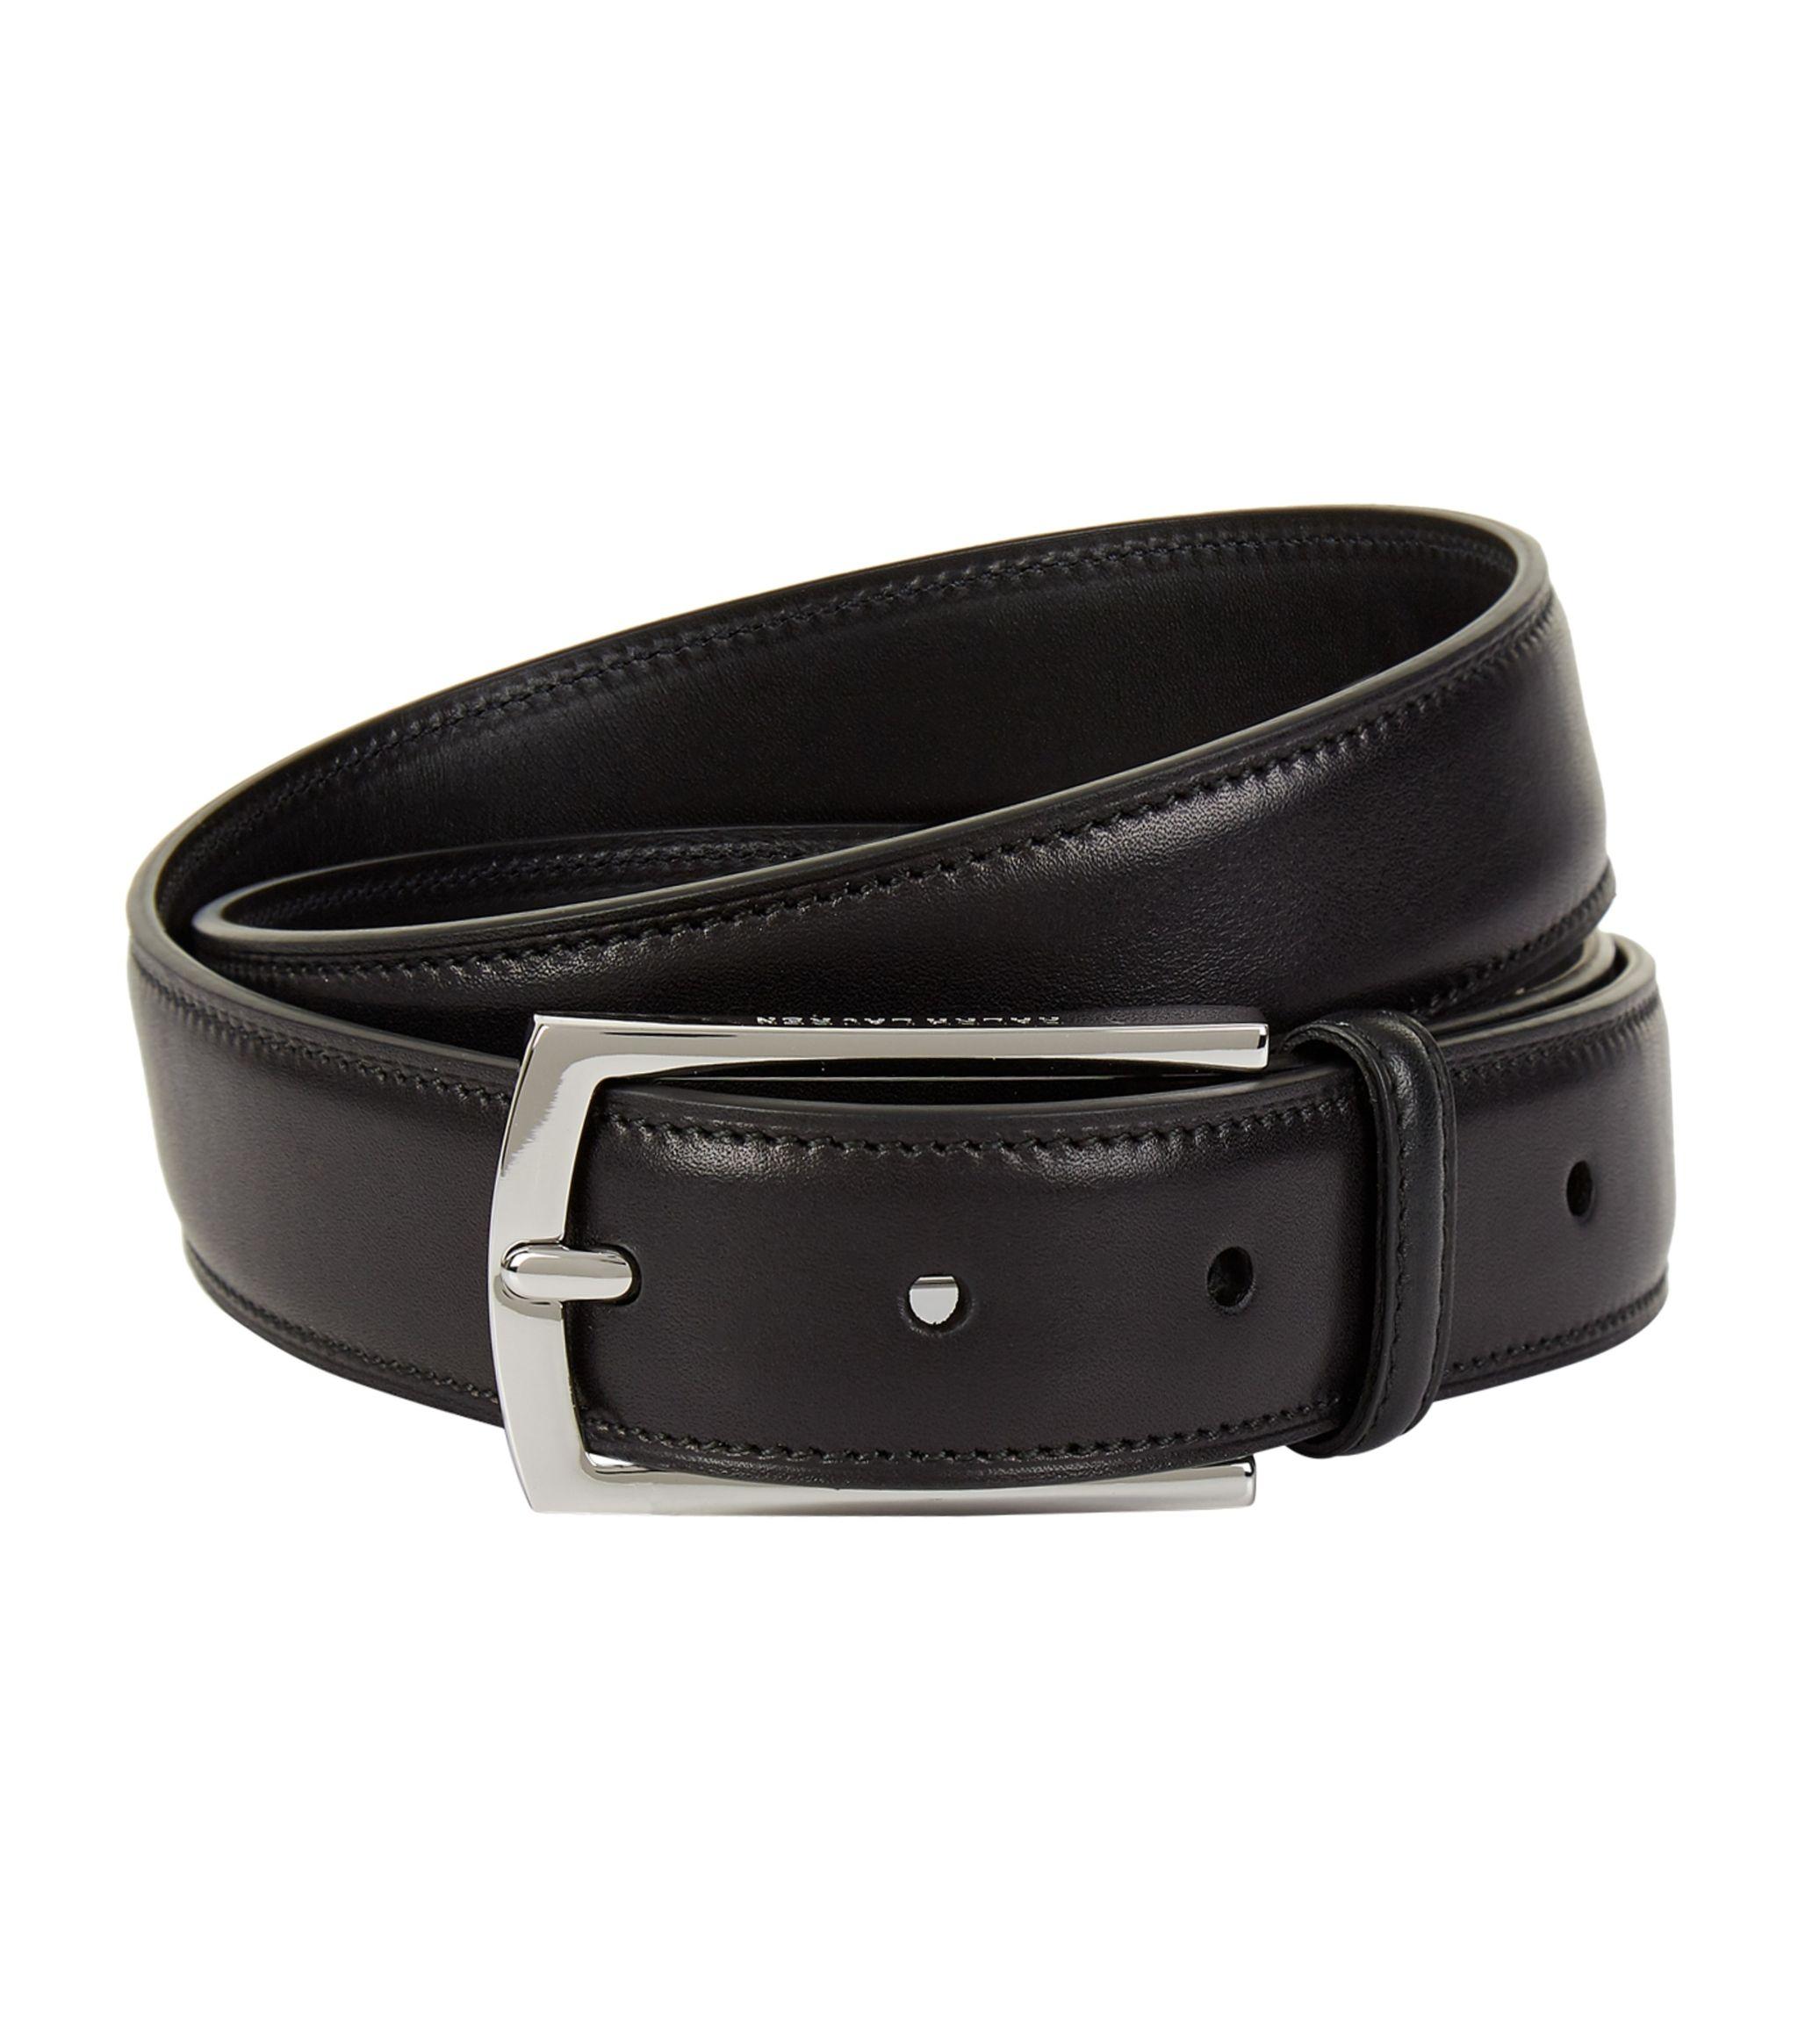 Ralph Lauren Leather Belt in Black for Men - Lyst